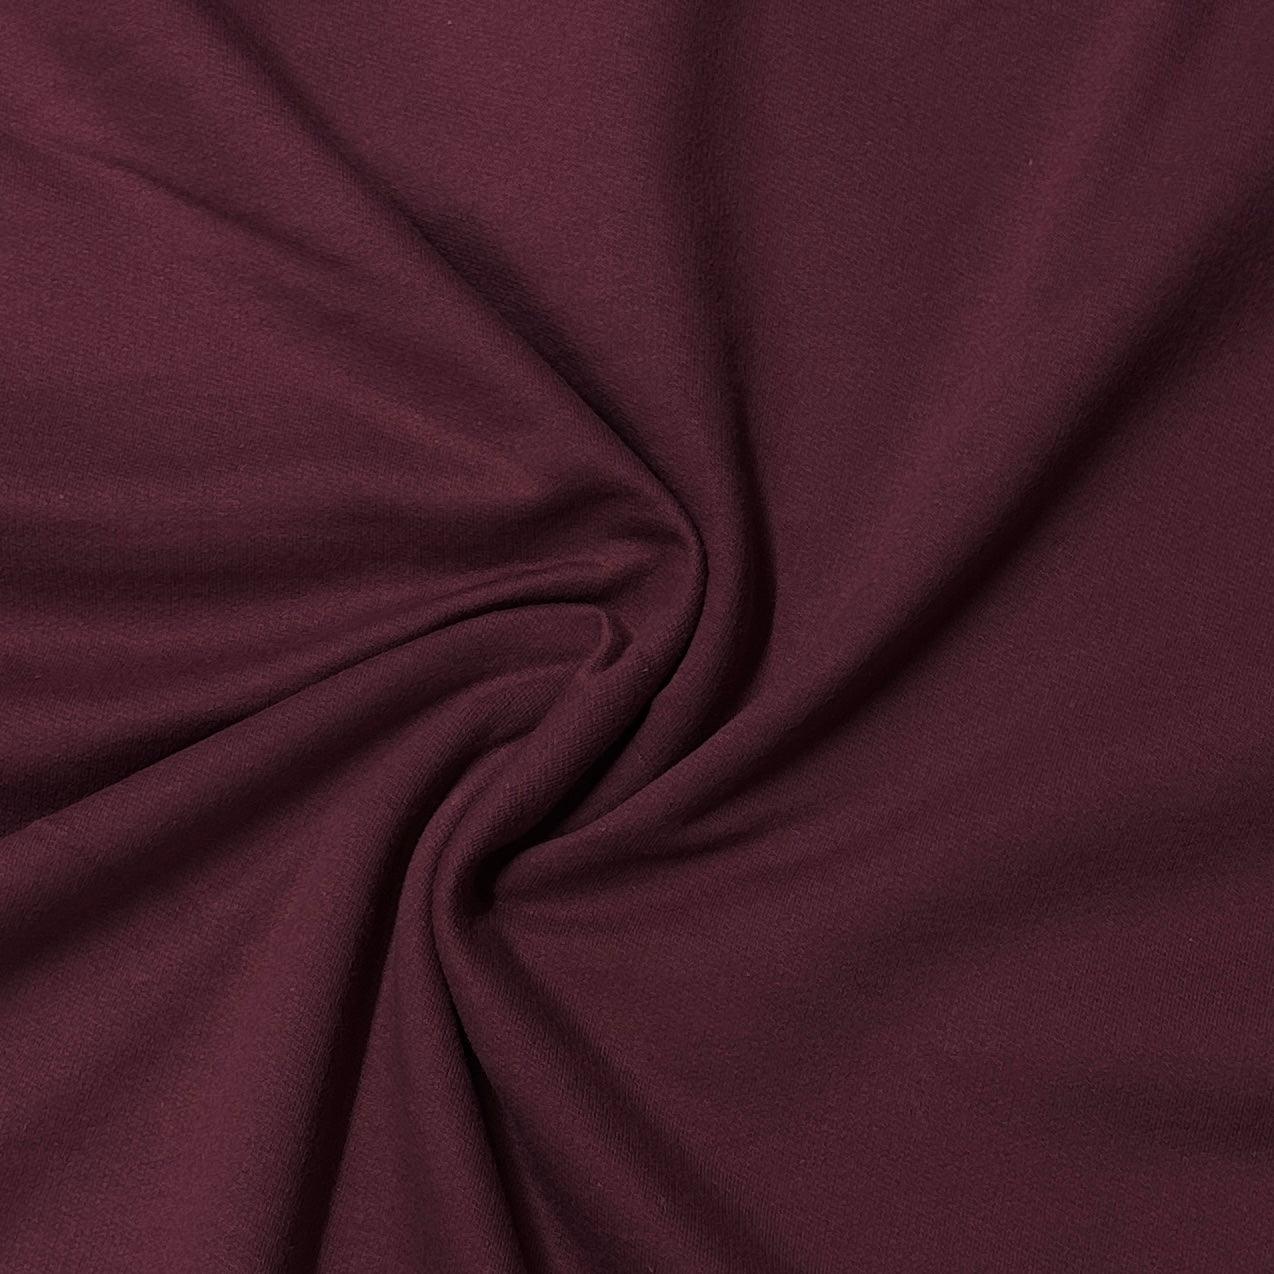 Burgundy Cotton Fleece Fabric - Nature's Fabrics